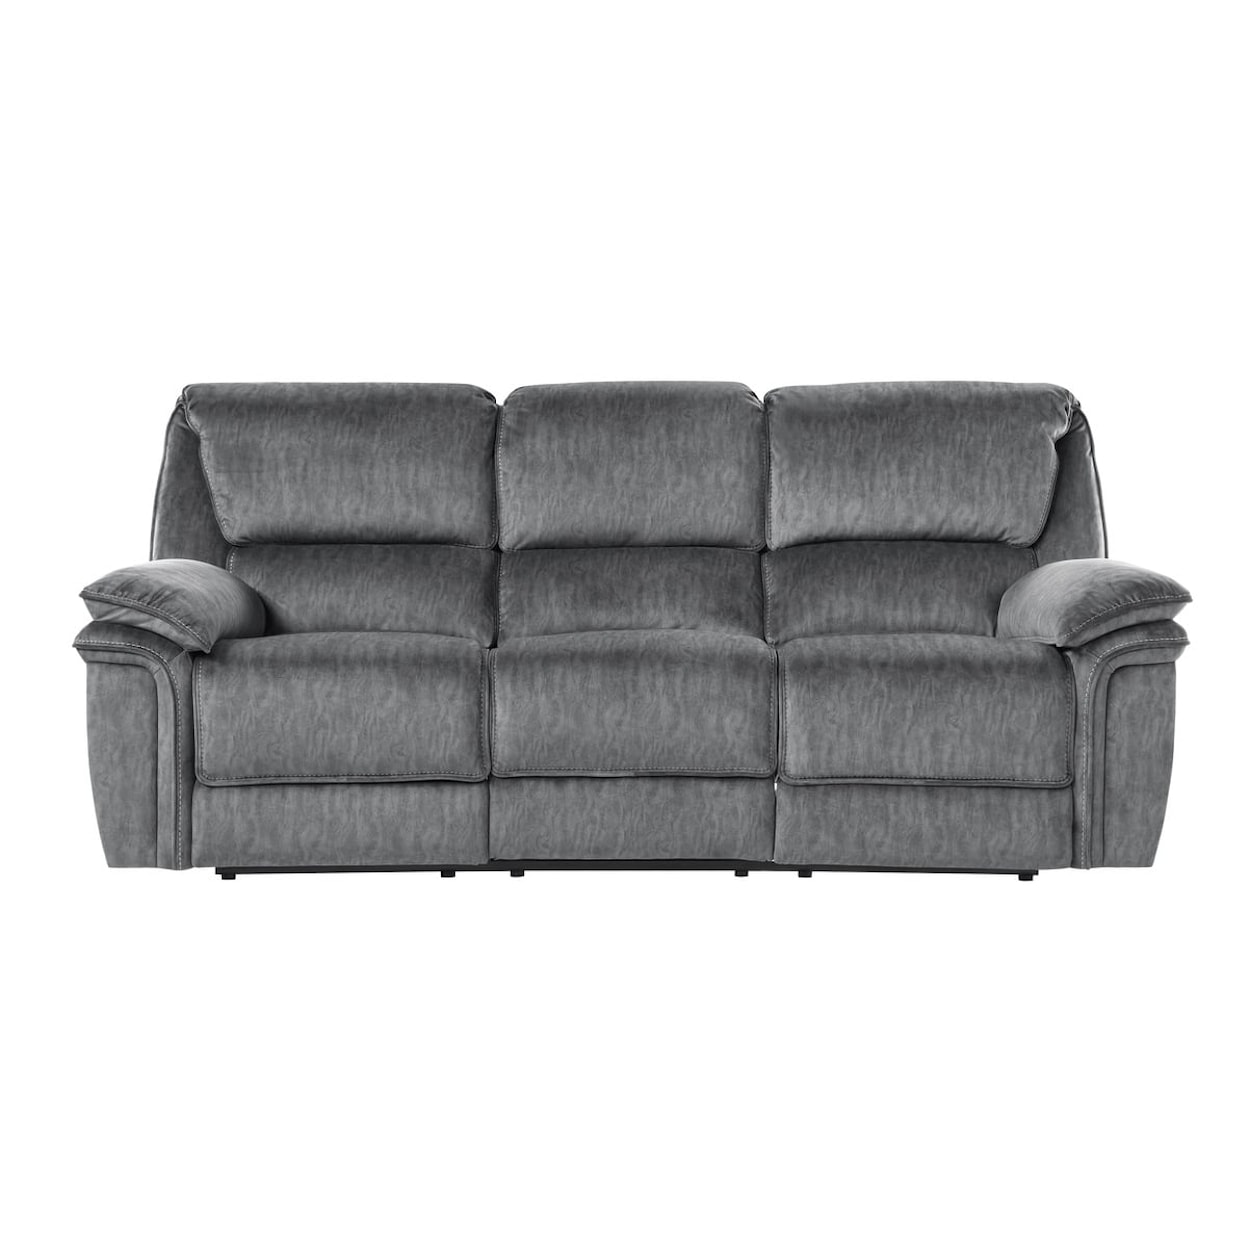 Homelegance Furniture Muirfield Double Reclining Sofa